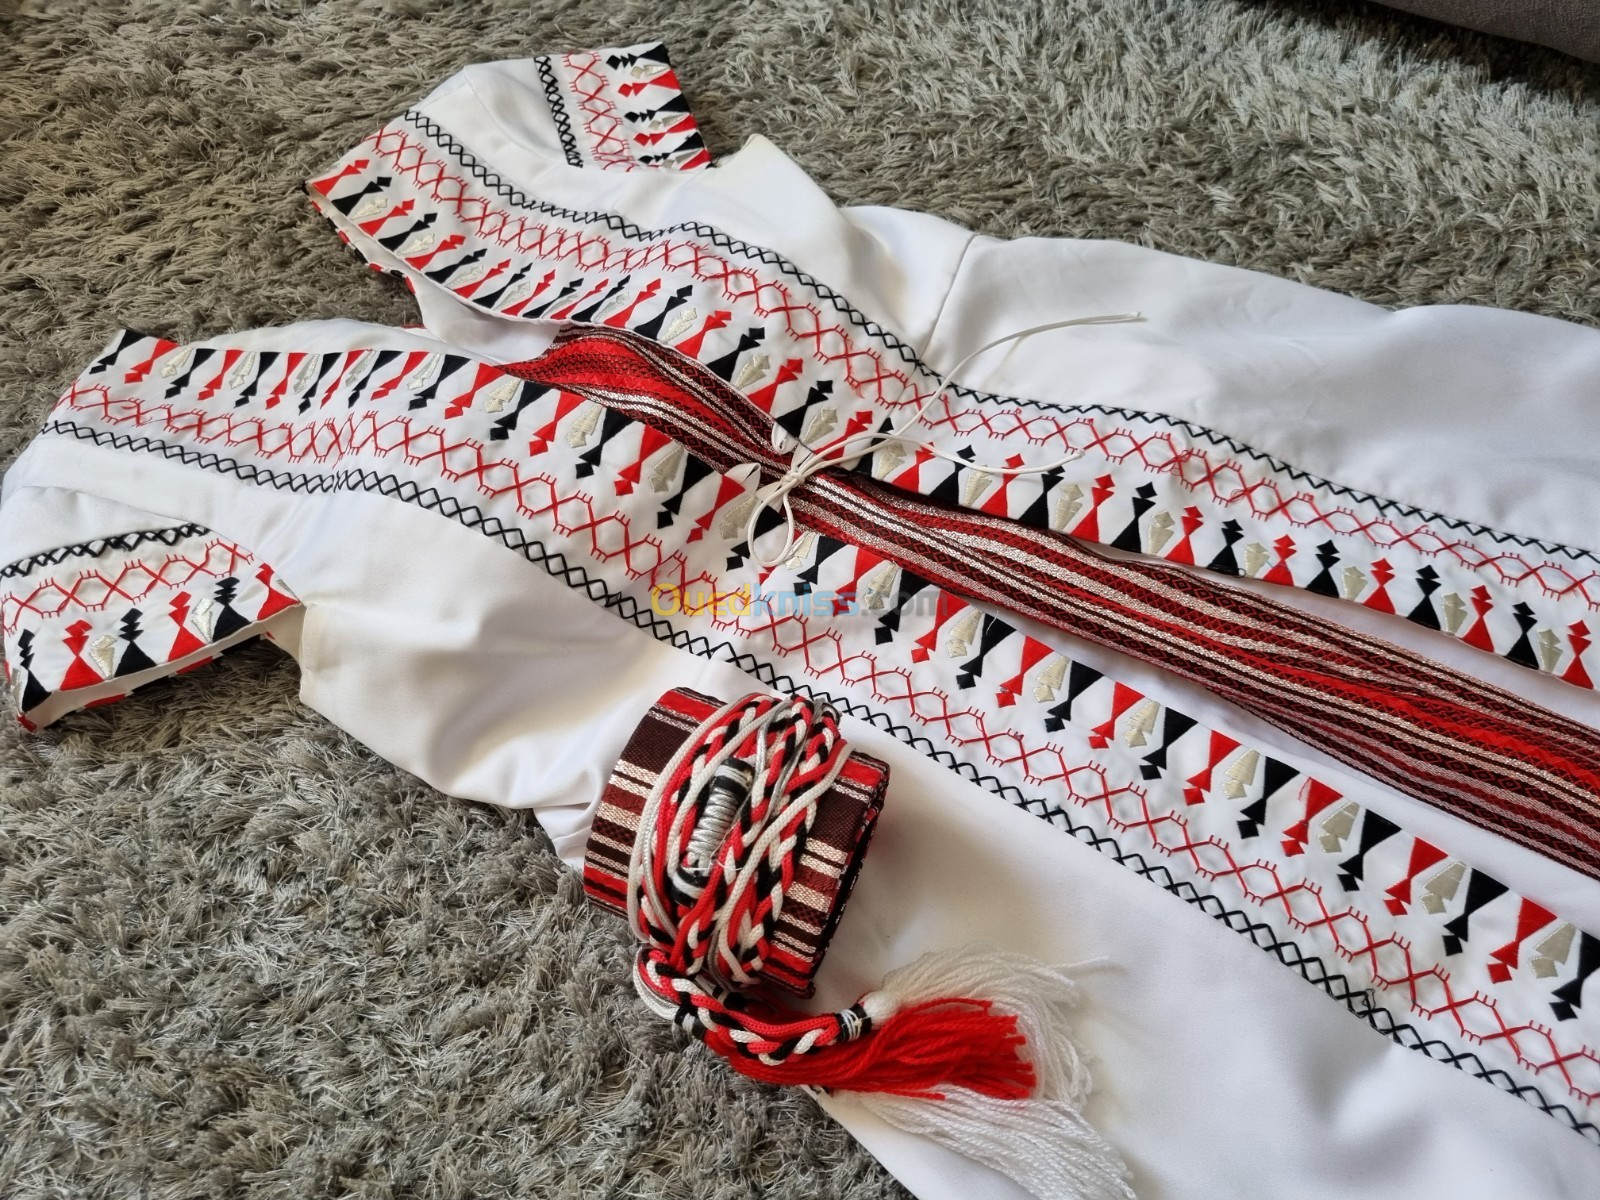 Robe kabyle berbère 